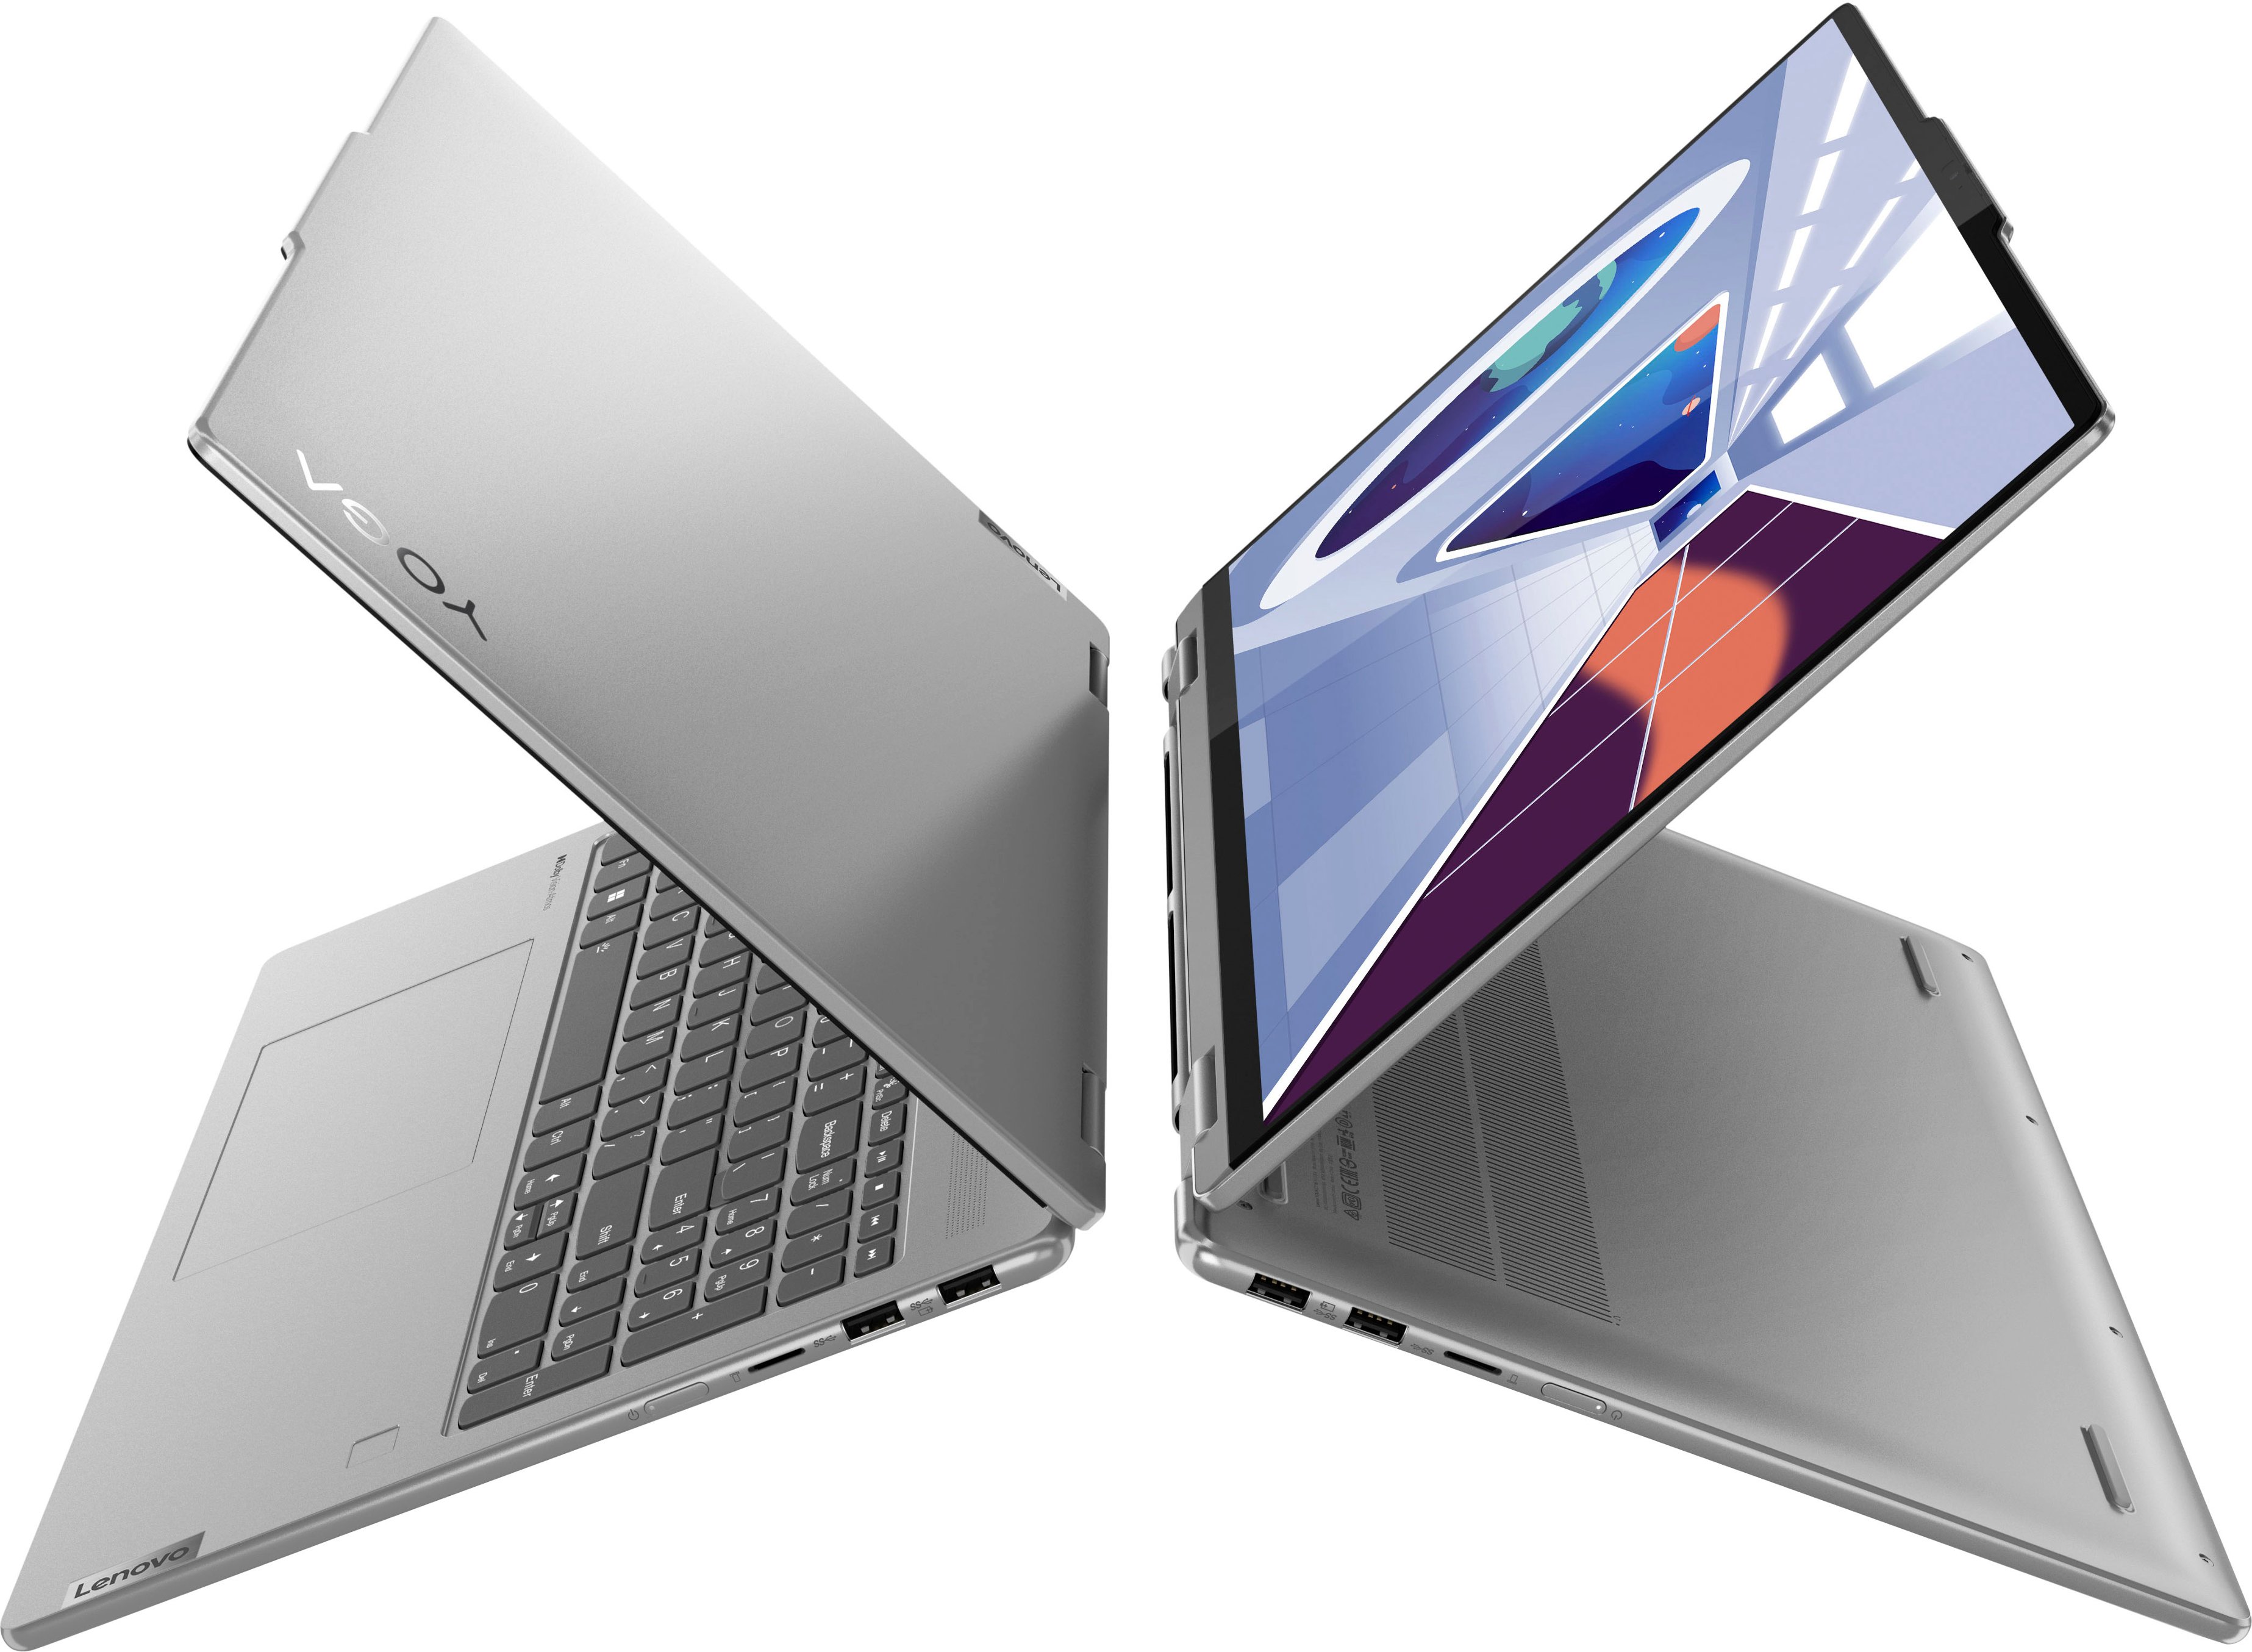 Yoga 7 (16” AMD), 2-in-1 Laptop with AMD Ryzen™ 7000 Processor